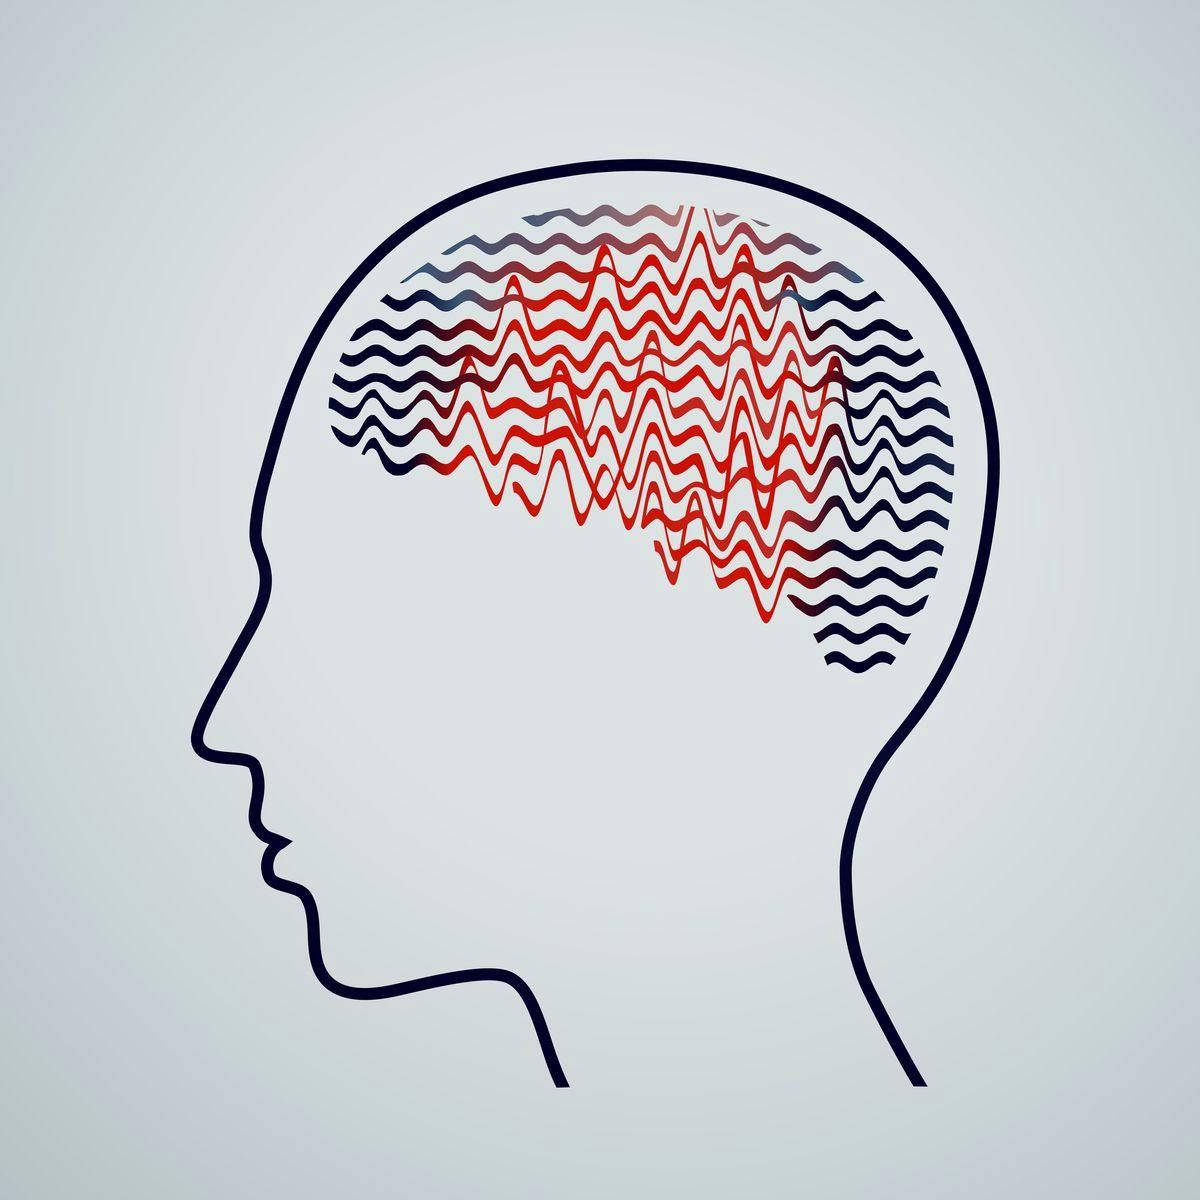 Human brain epilepsy activity